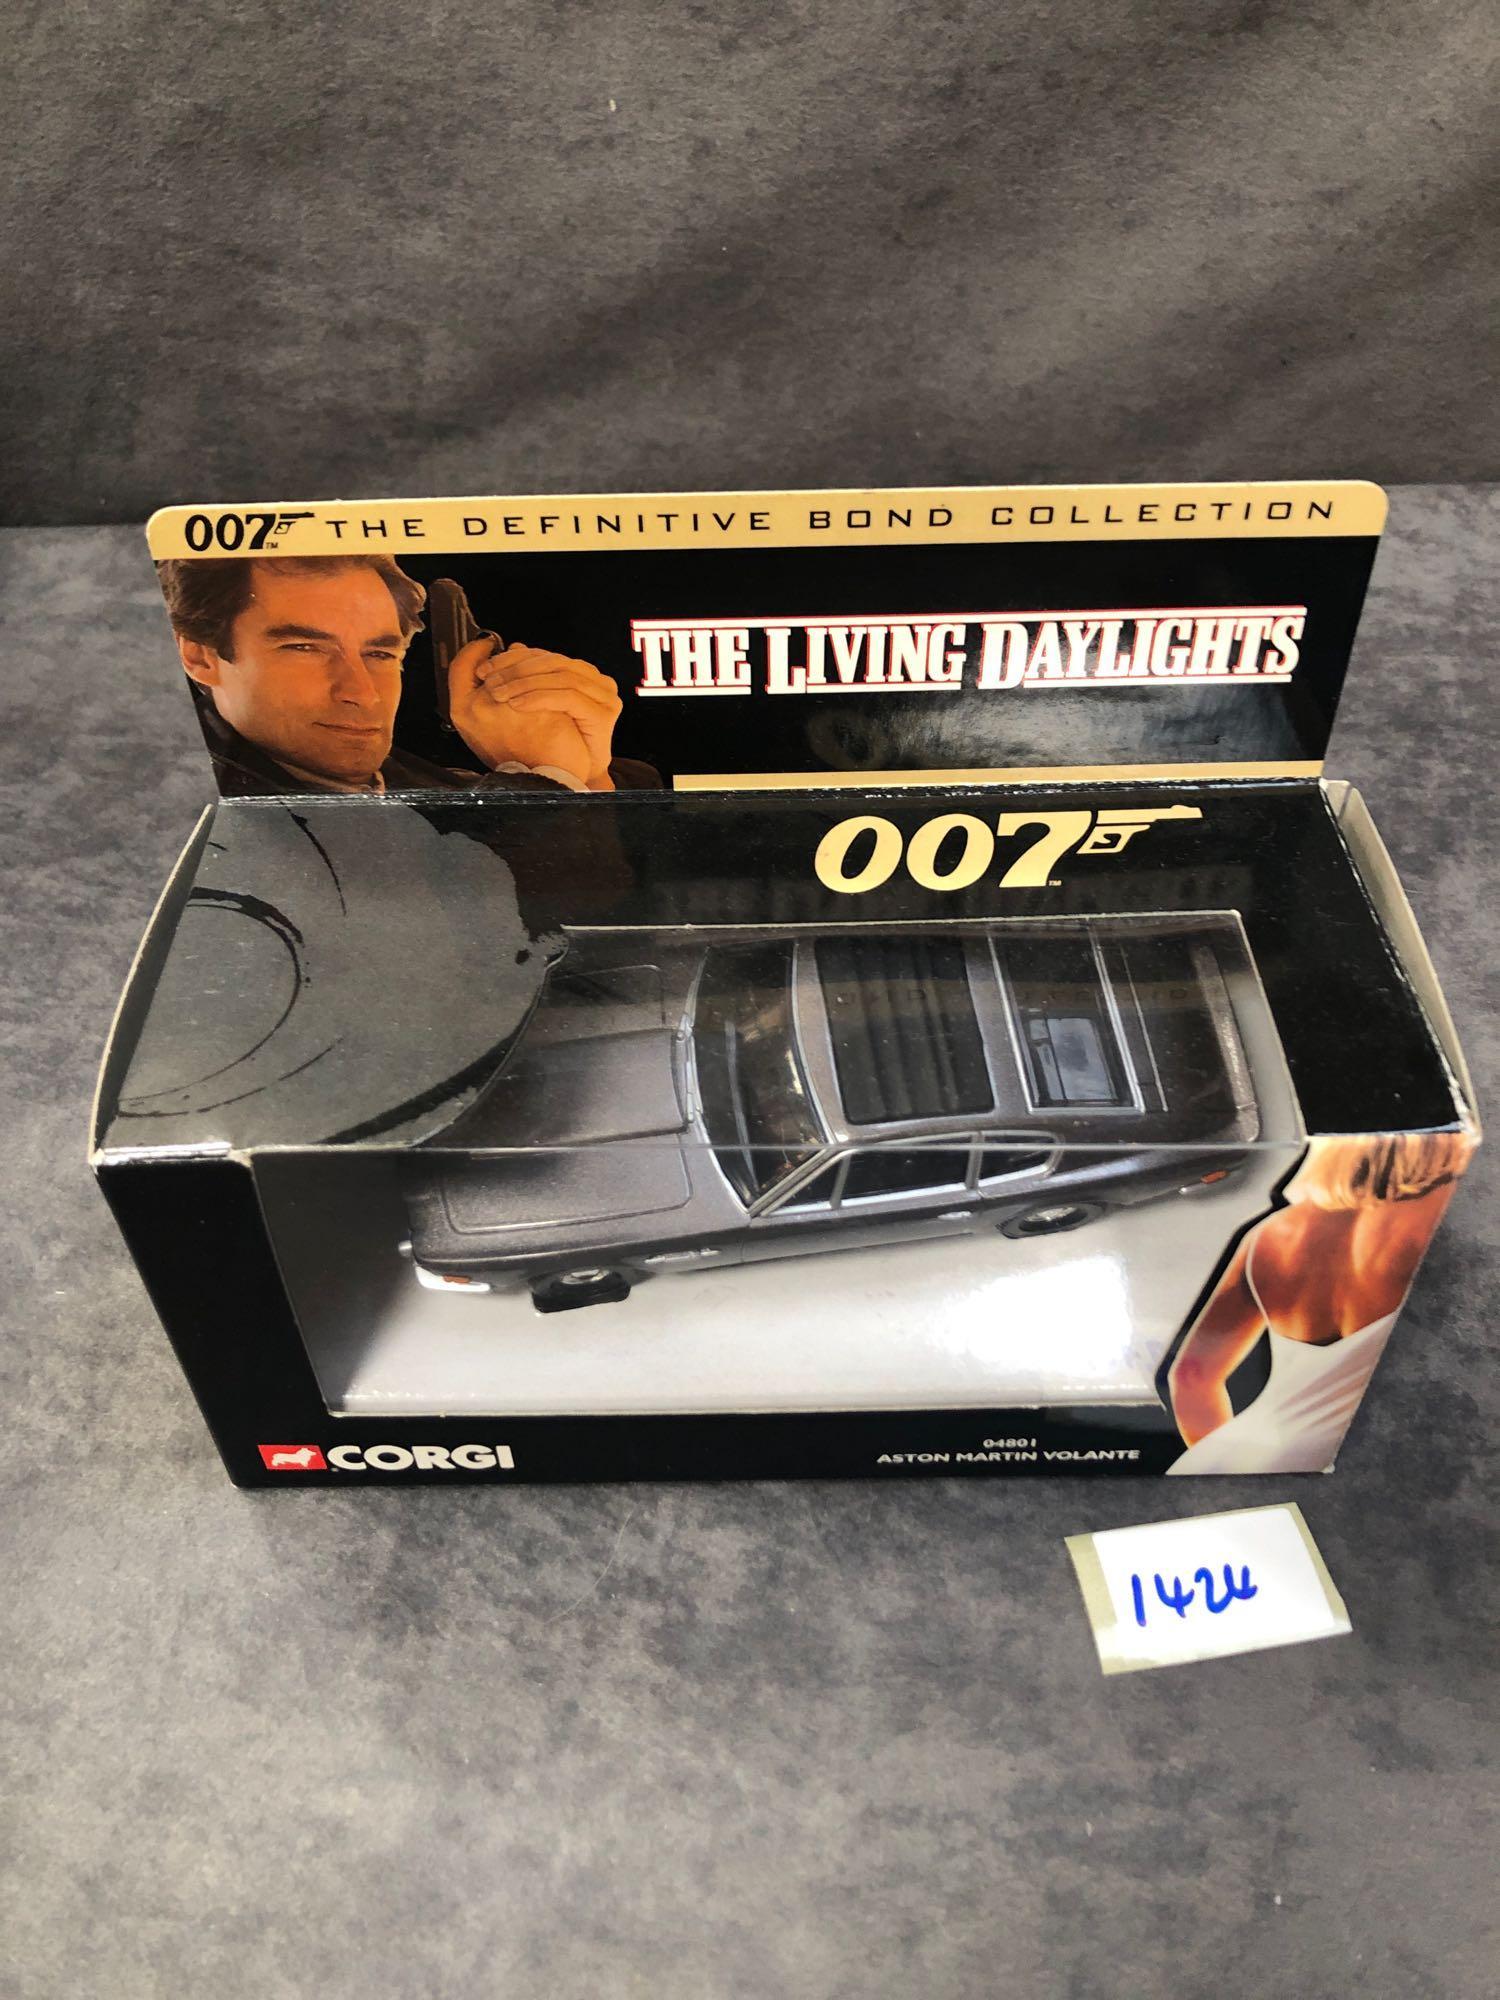 Corgi Diecast 007 The Definite Of Bond Collection #04801 Aston Martin Volanti From The Living